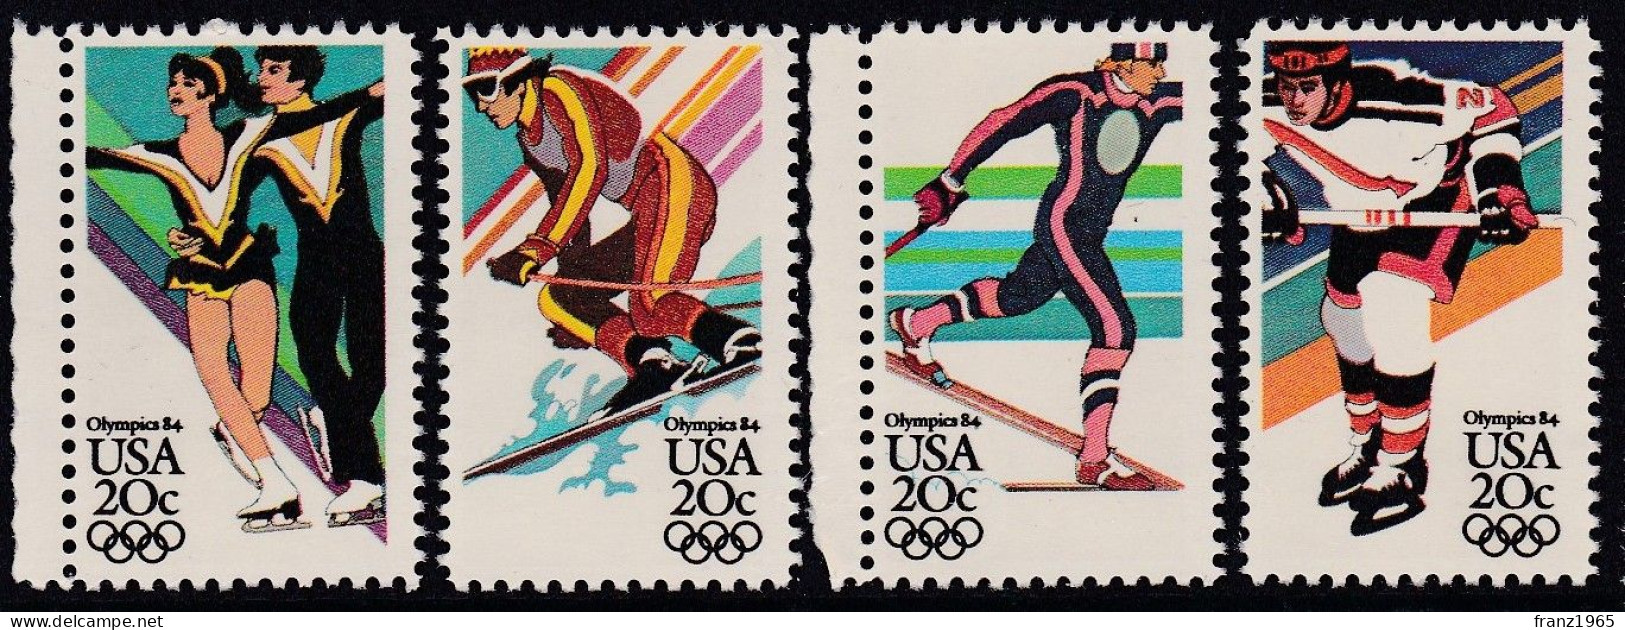 USA - Olympic Winter Games - 1984 - Winter 1984: Sarajevo